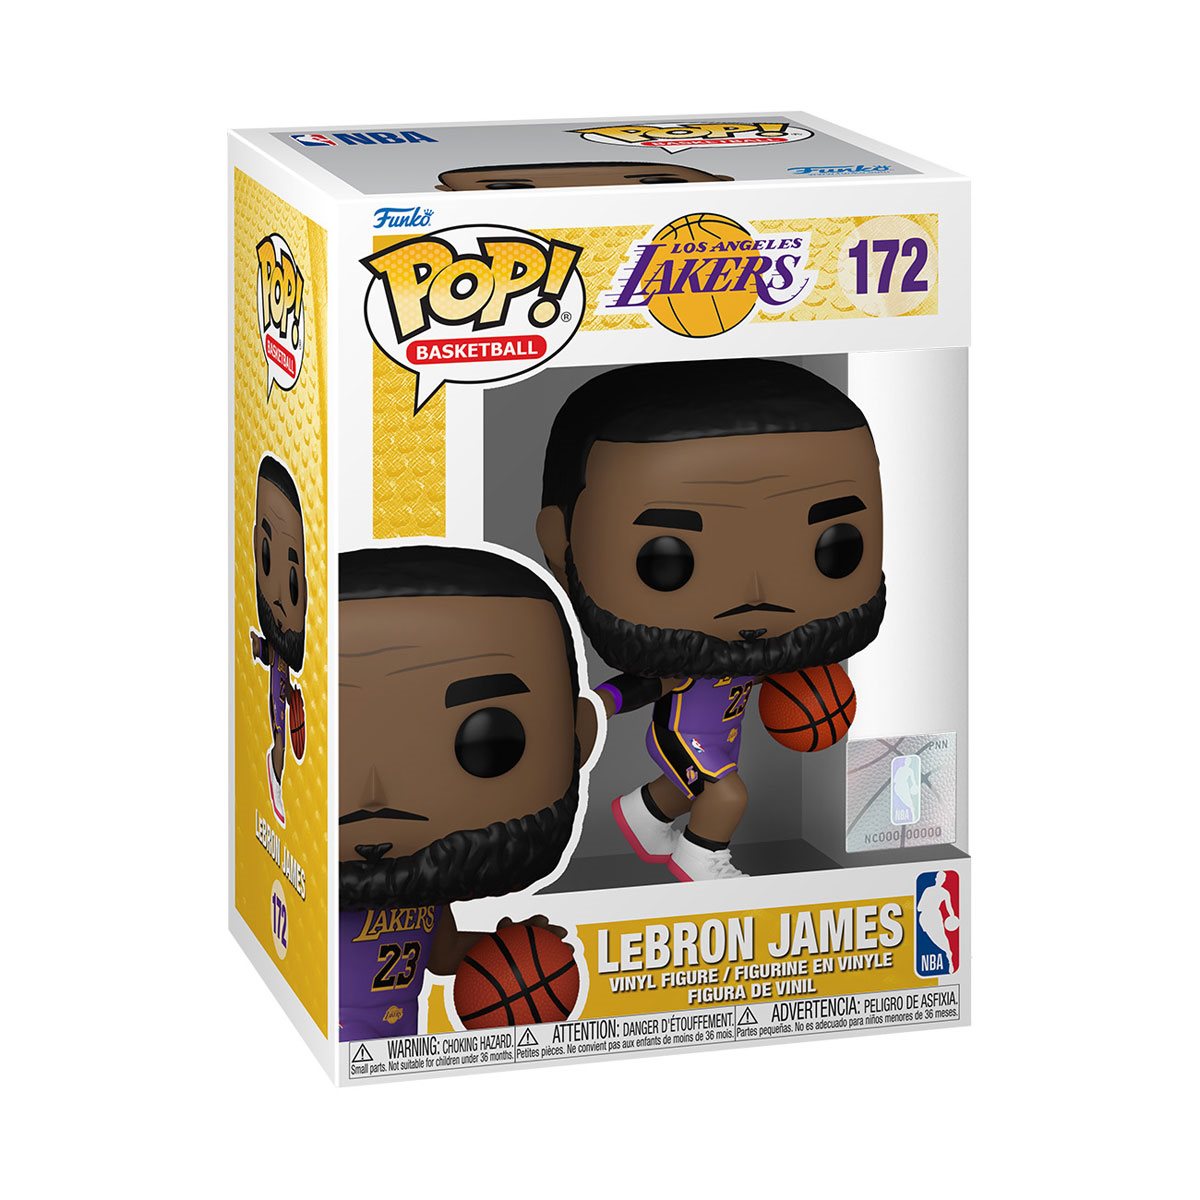 Funko Pop NBA: Lakers - LeBron James